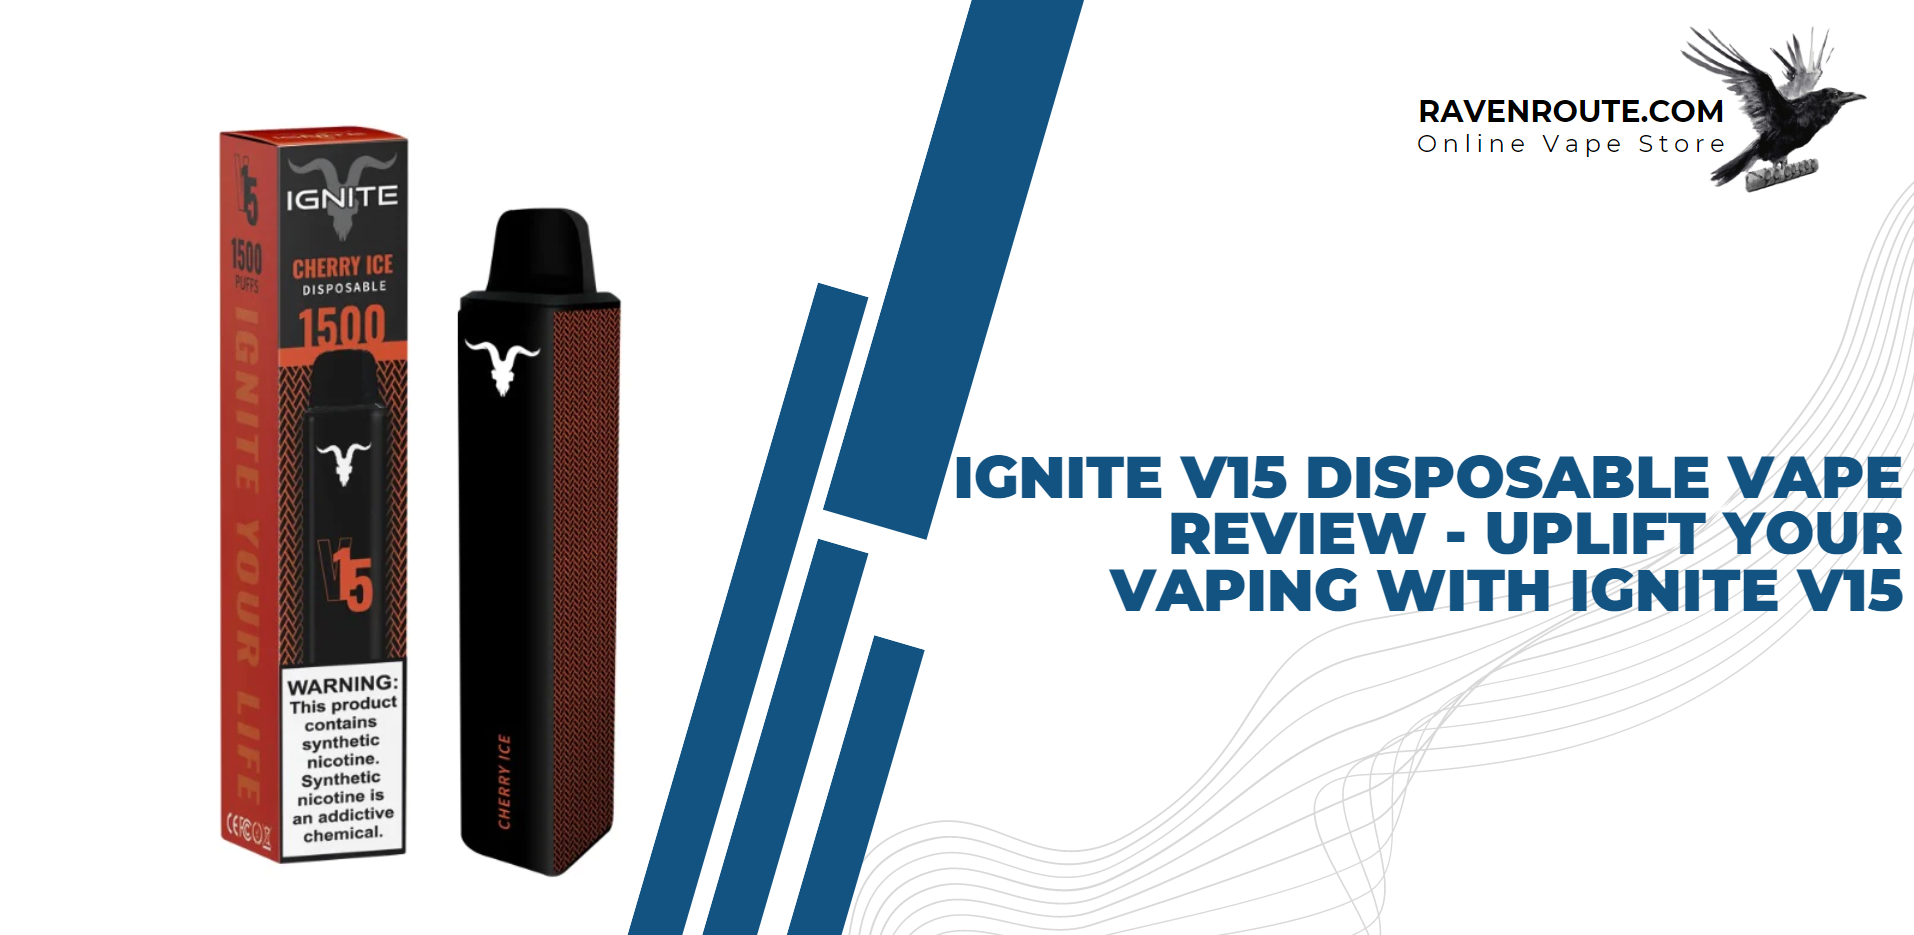 Ignite V15 Disposable Vape Review - Uplift Your Vaping With Ignite V15